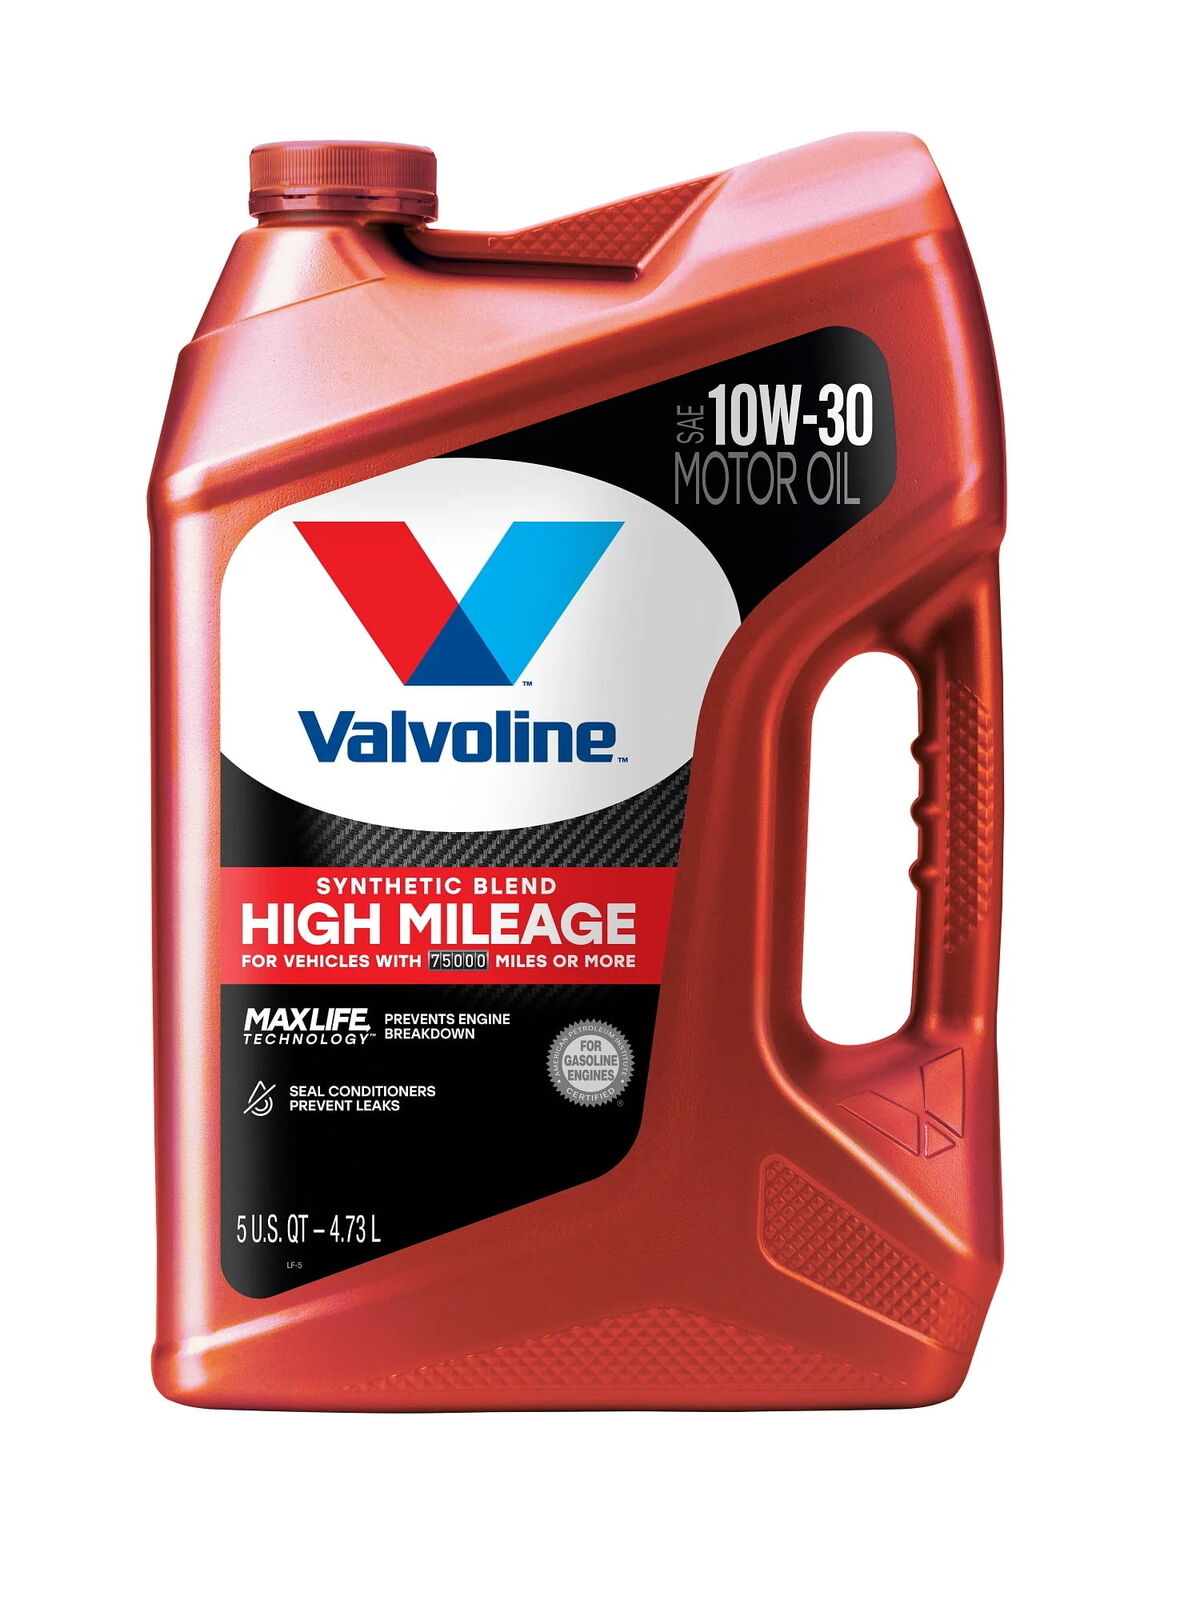 Valvoline High Mileage with MaxLife Technology Motor Oil SAE 10W-30